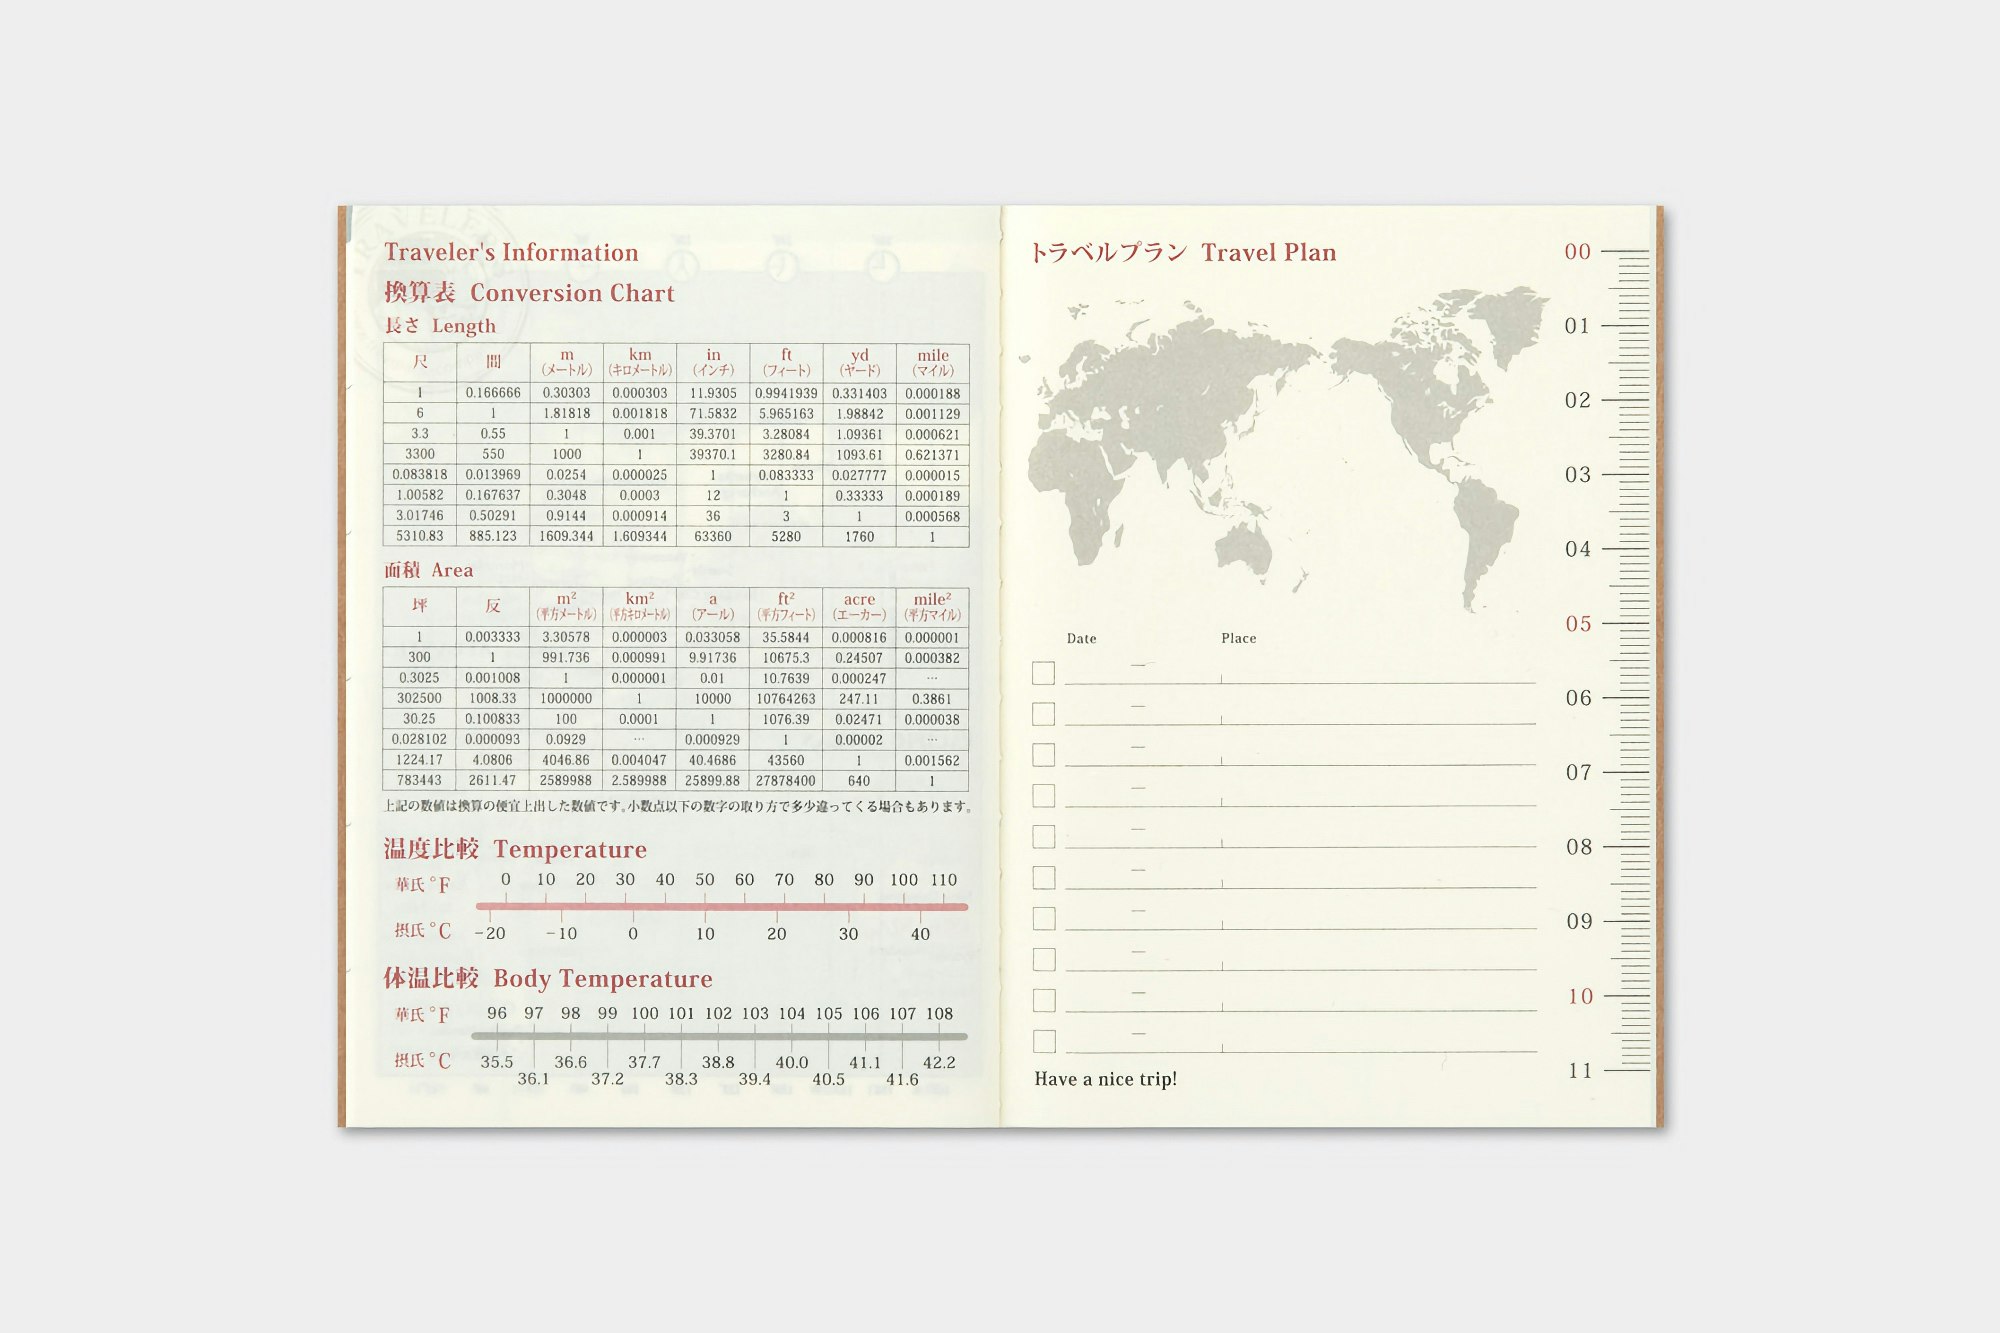 Traveler’s Company Traveler's notebook - 2024 Monthly, Passport Size